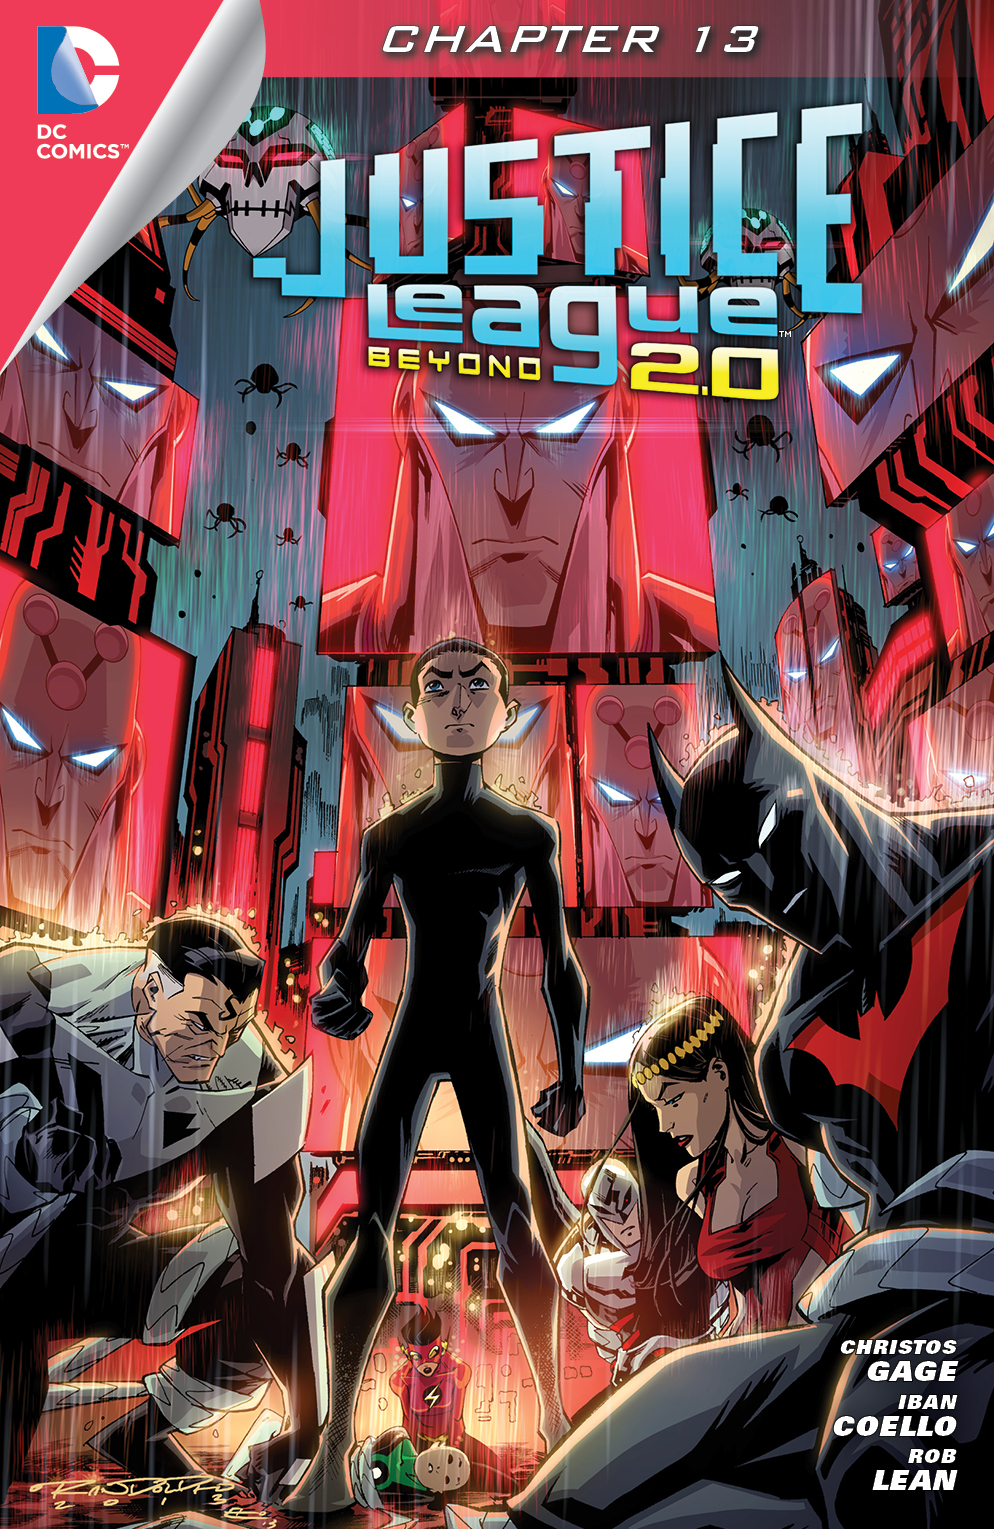 Justice League Beyond 2.0 #13 preview images